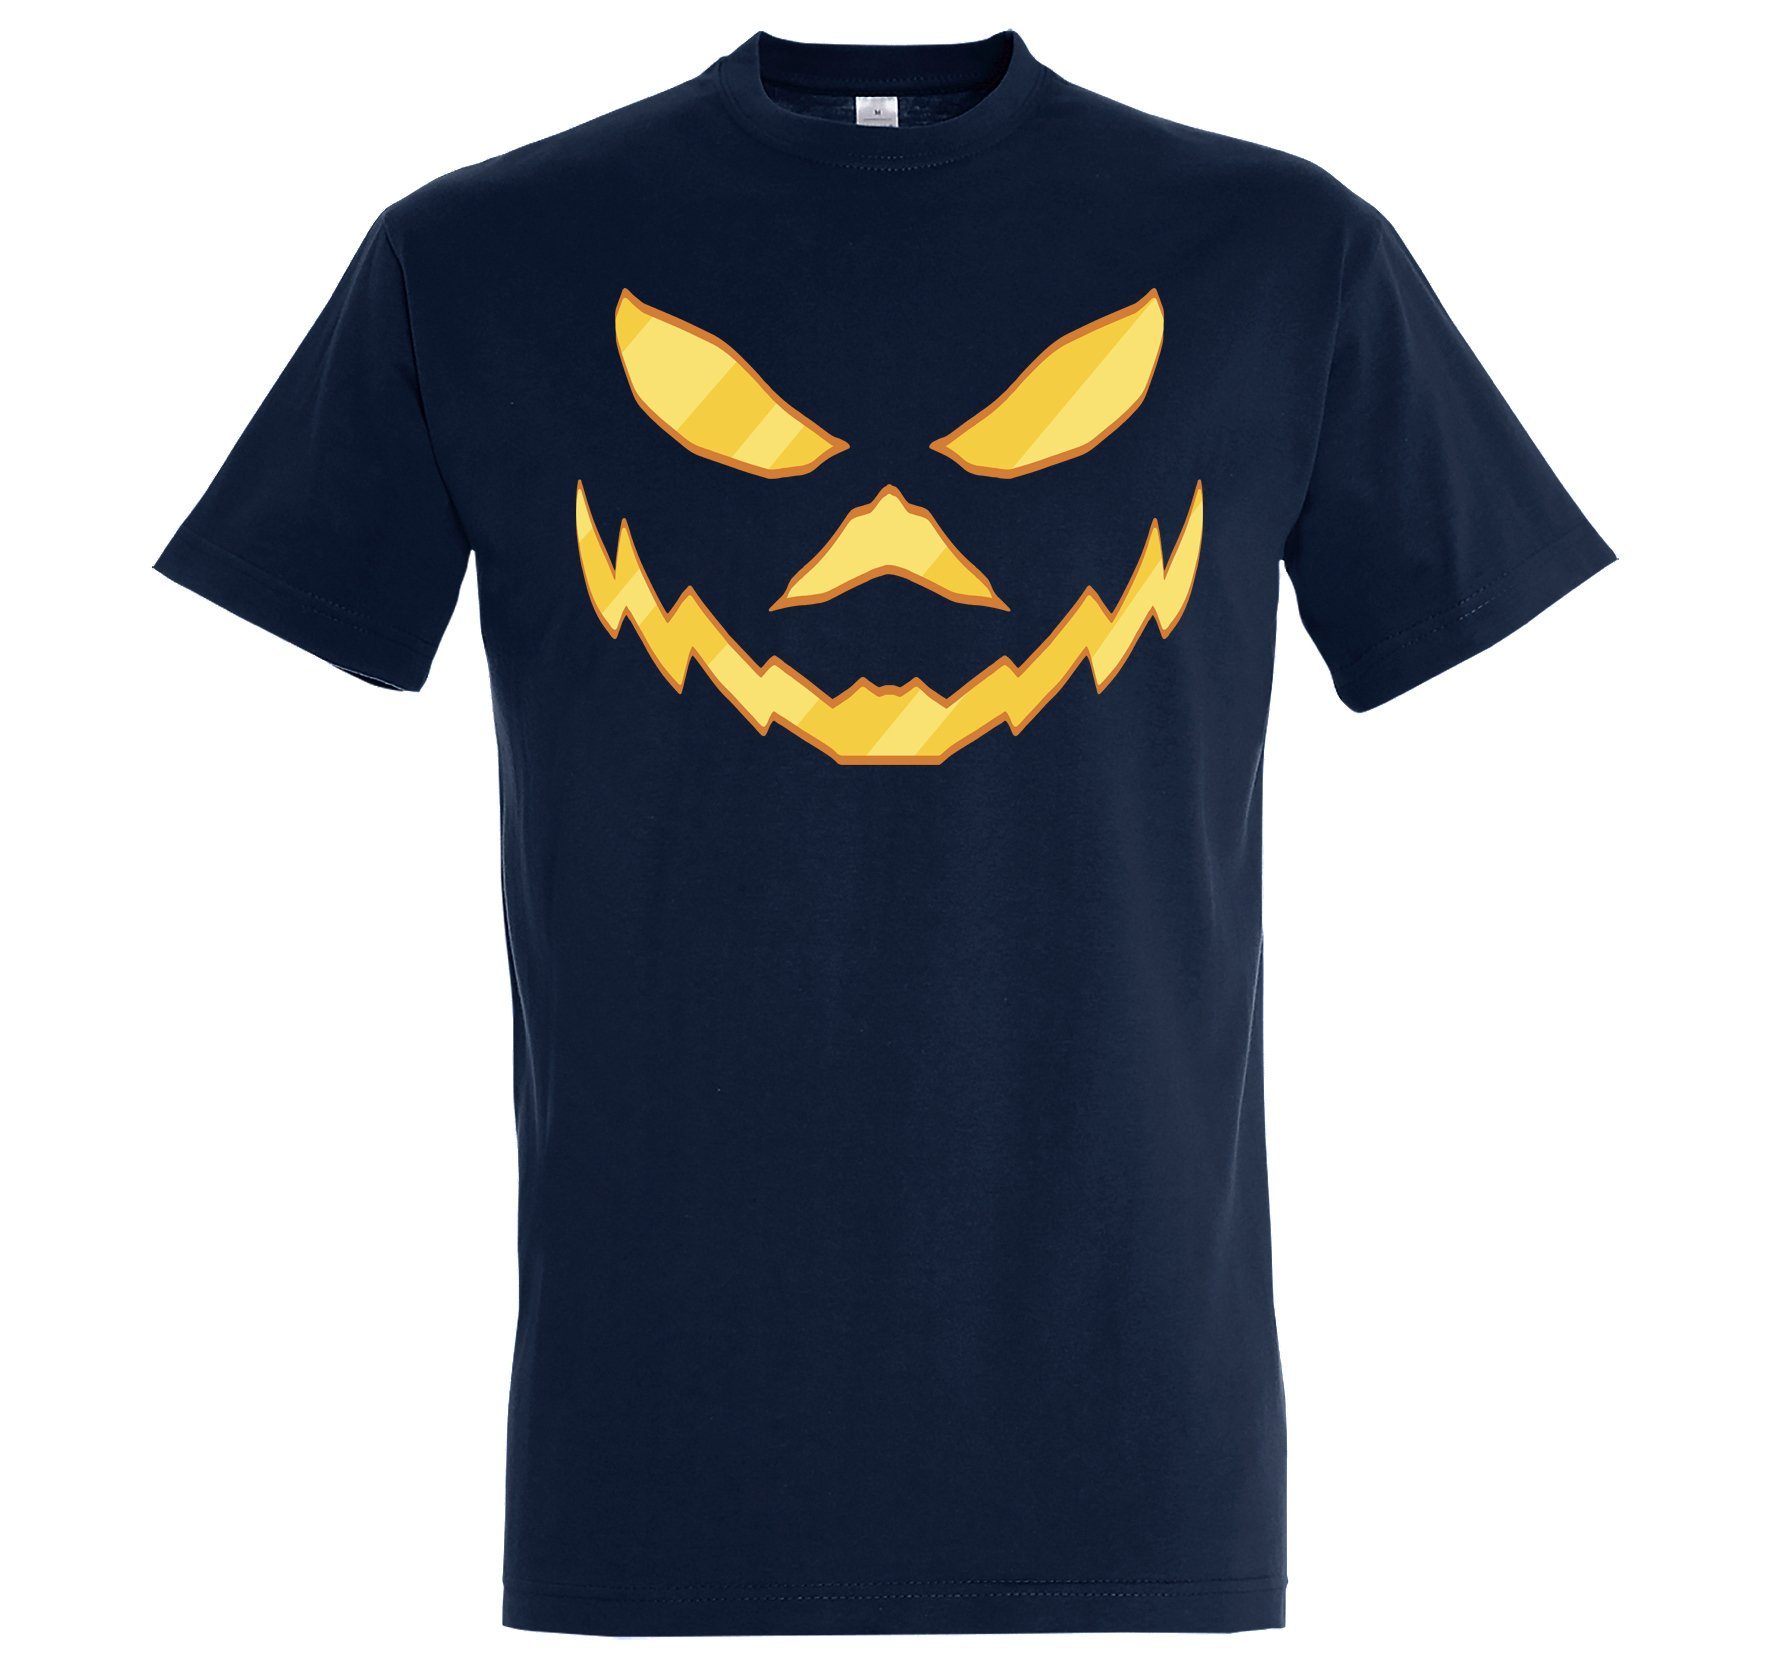 Youth Designz Print-Shirt Halloween Herren T-Shirt Horror Joker Face Fun-Look mit modischem Print Aufdruck